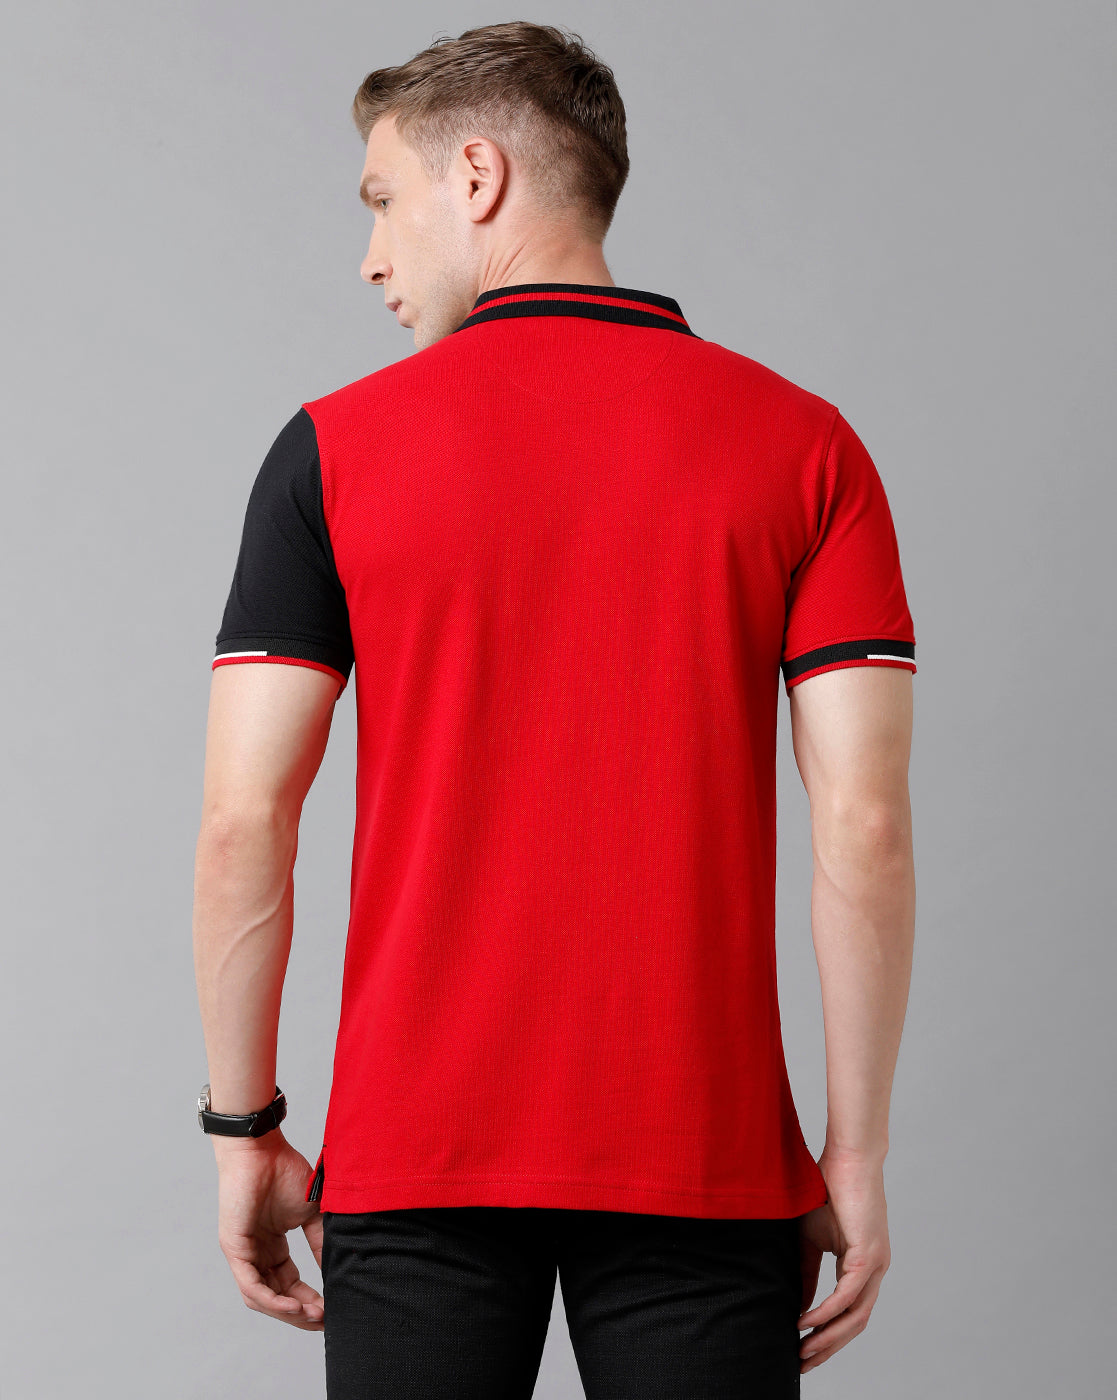 CP BRO Men's Cotton Color Block Half Sleeve Slim Fit Polo Neck Red Color T-Shirt | Brp - 336 A